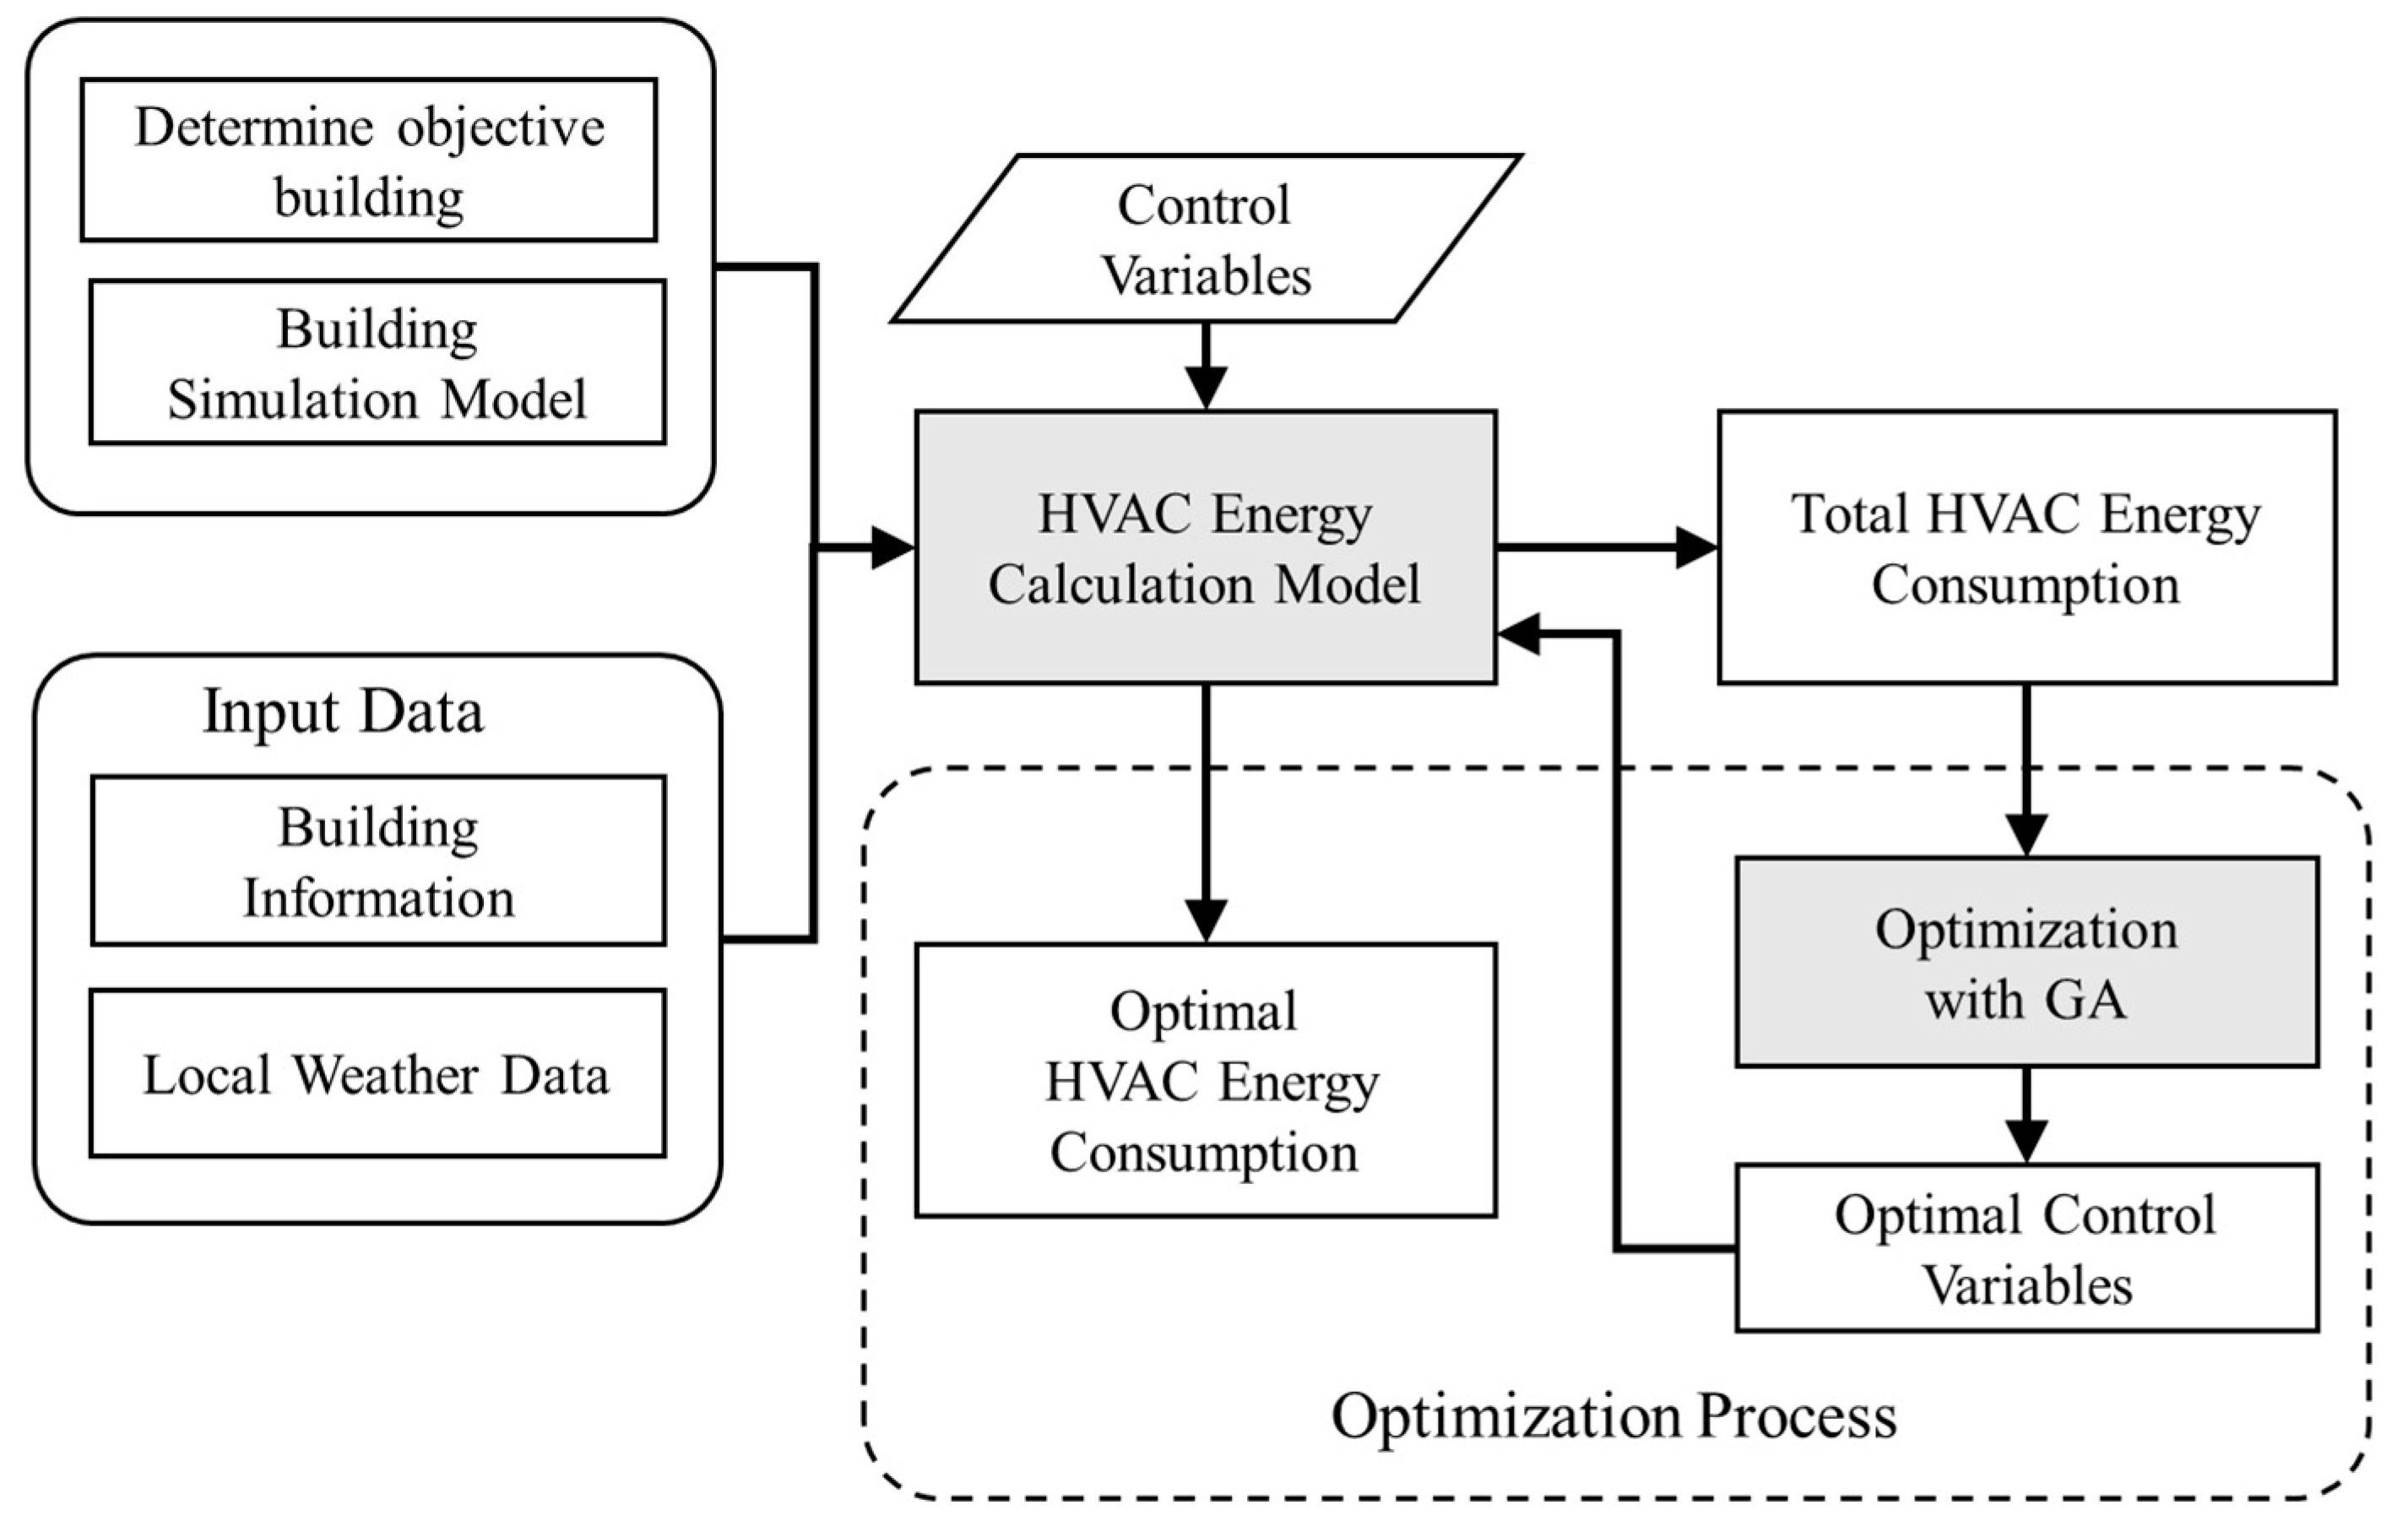 Hvac Flow Chart